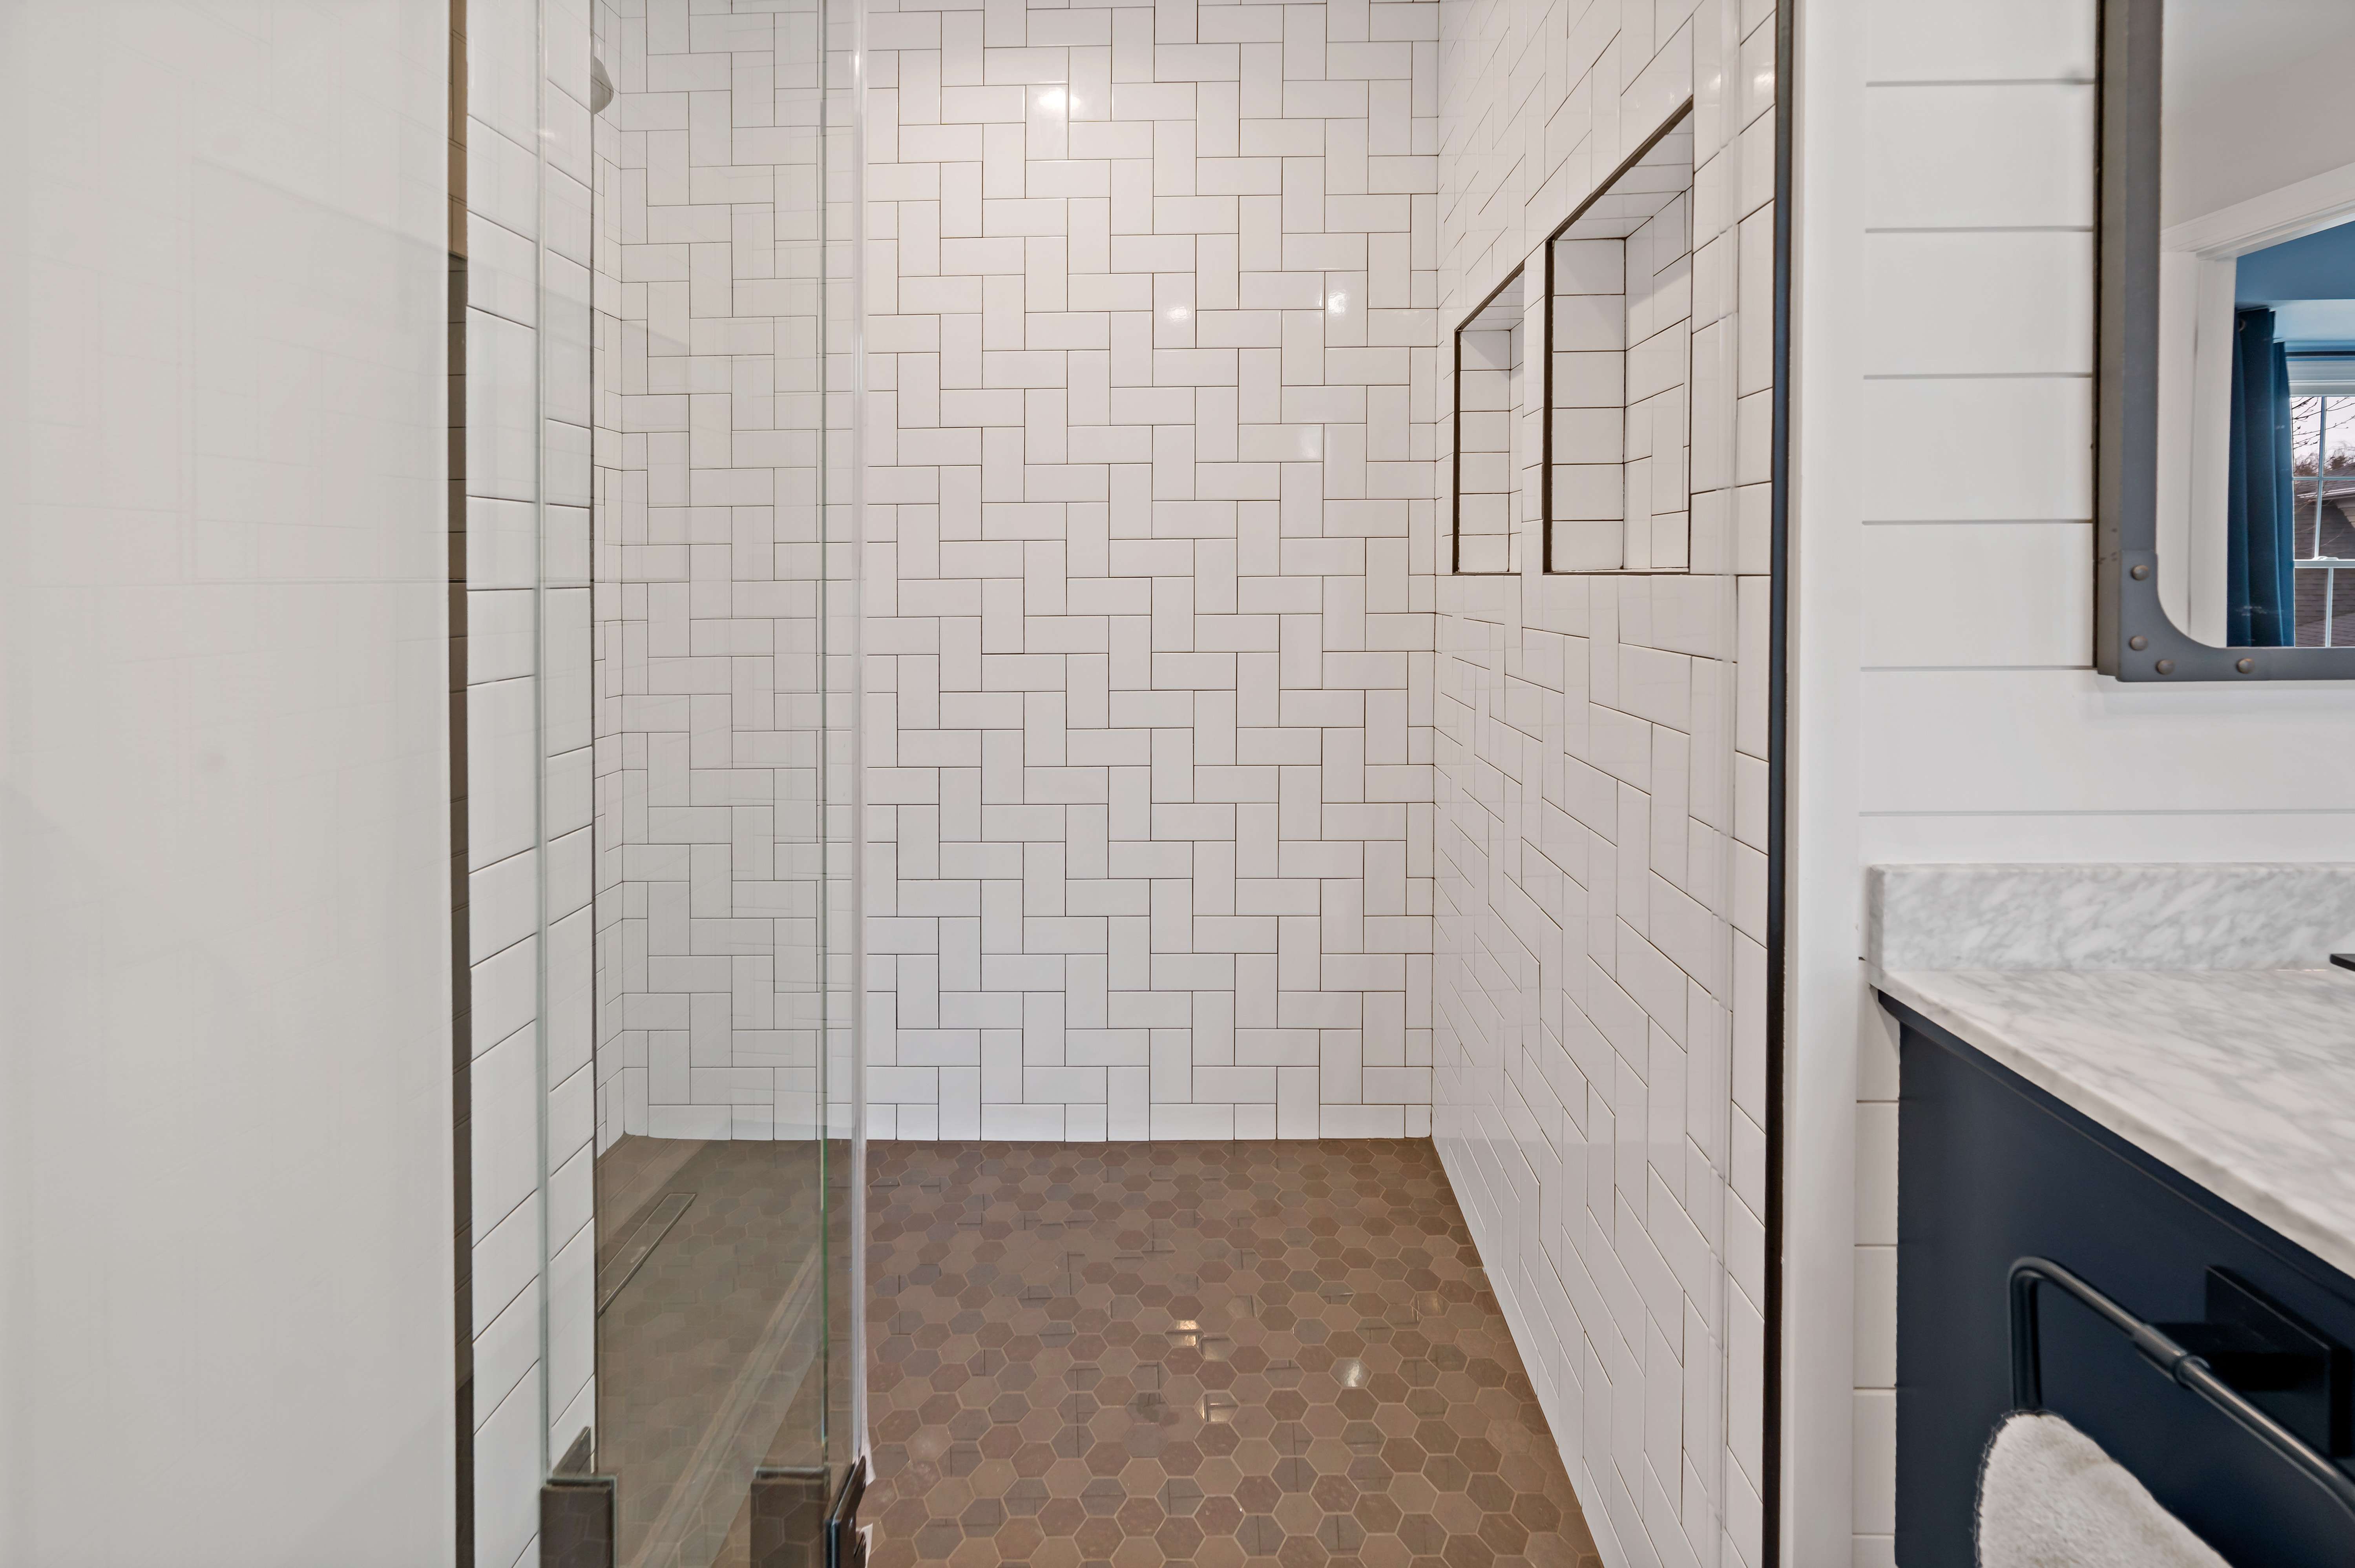 Brown shower tile floors and white tile walls